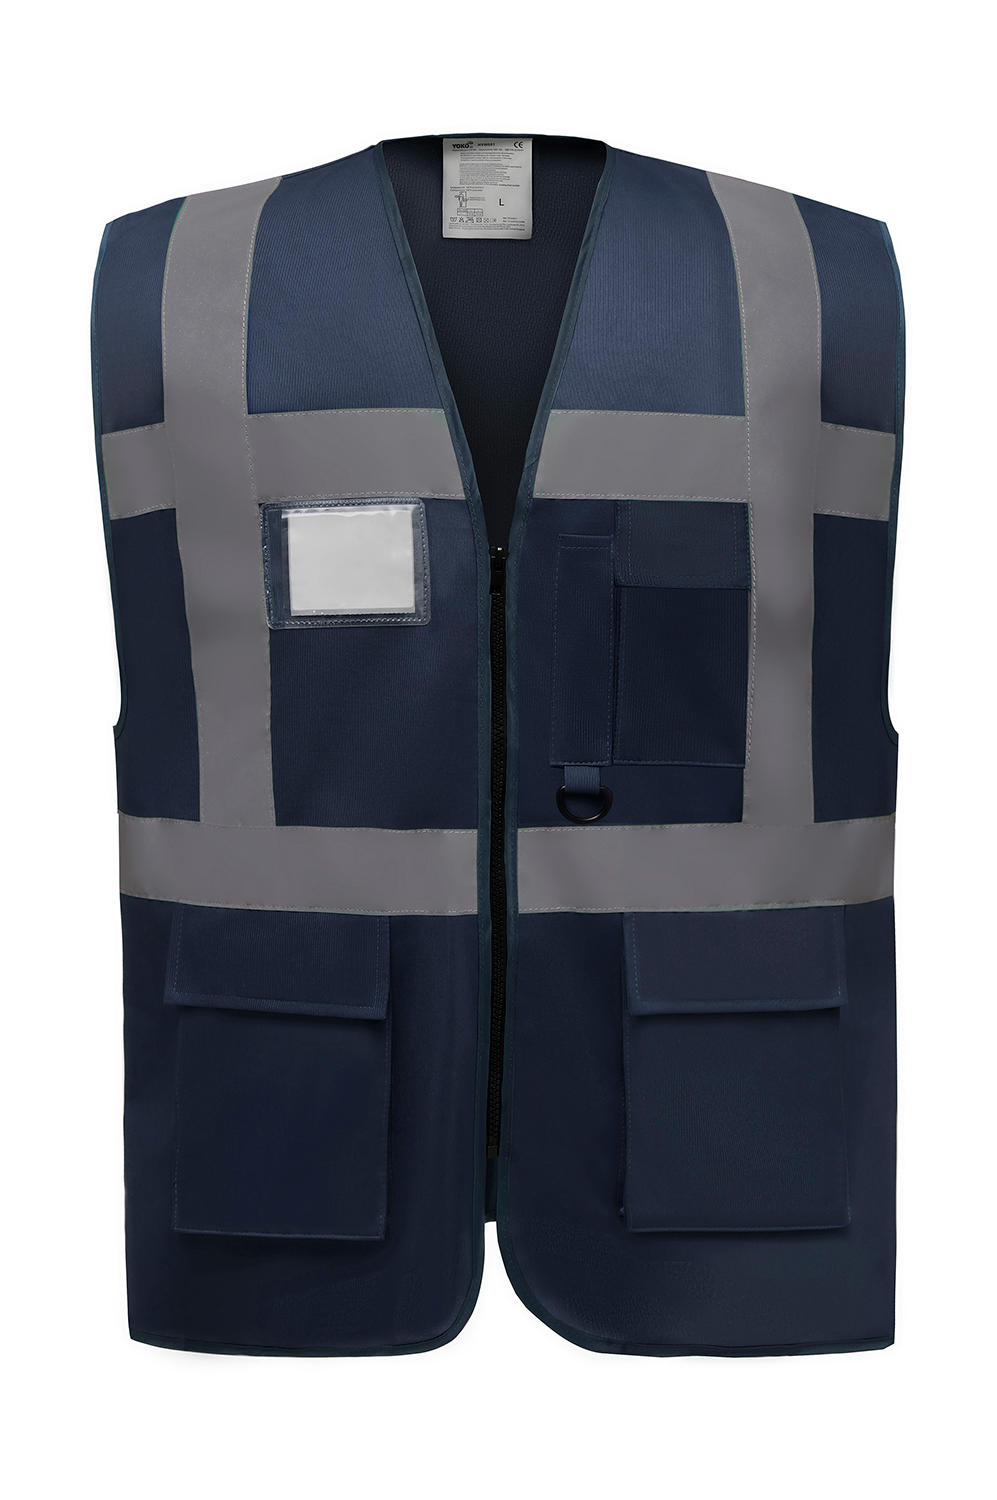  Fluo Executive Waistcoat in Farbe Navy